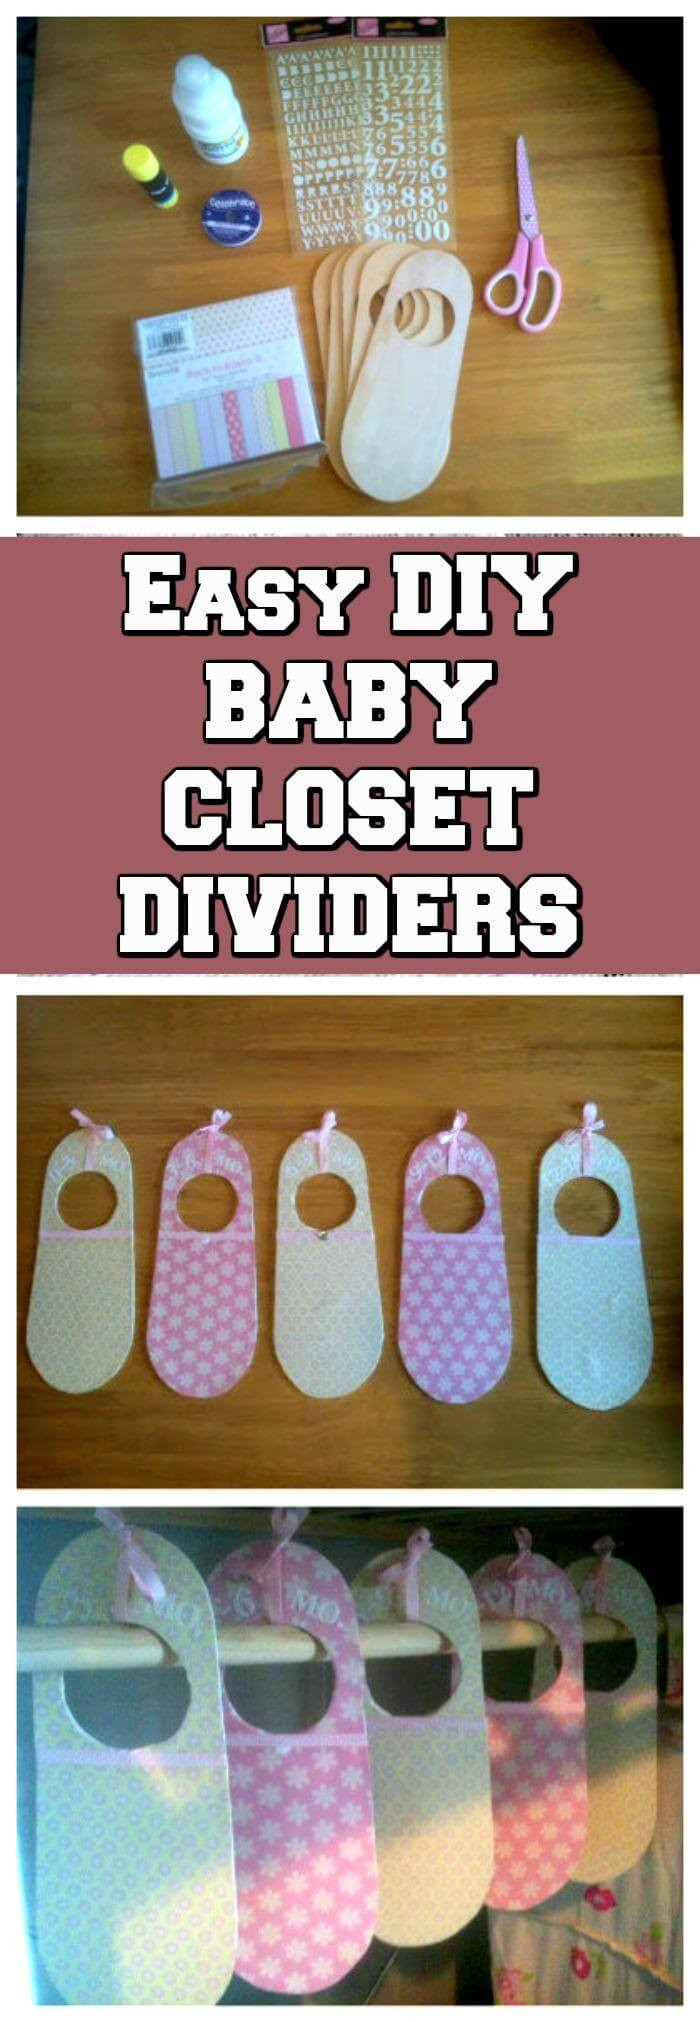 Diy Closet Dividers For Baby Clothes
 20 Easy DIY Baby Closet Dividers To Organize Baby Clothes